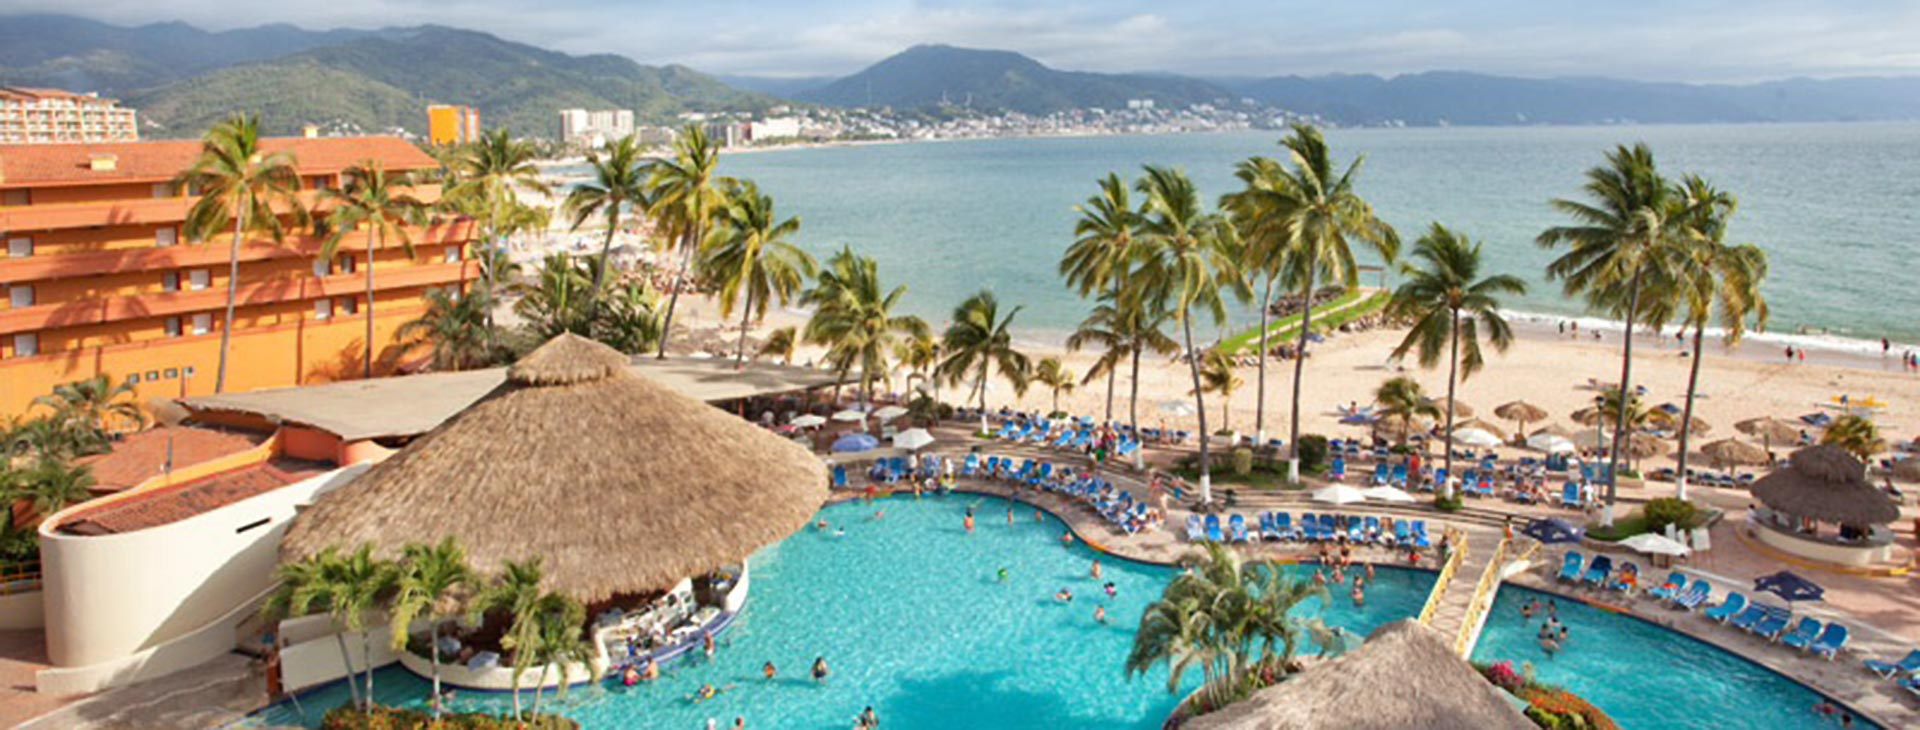 Meksyk Północny - Miedziane ścieżki Indian Raramuri, Sunscape Puerto Vallarta Resort & Spa